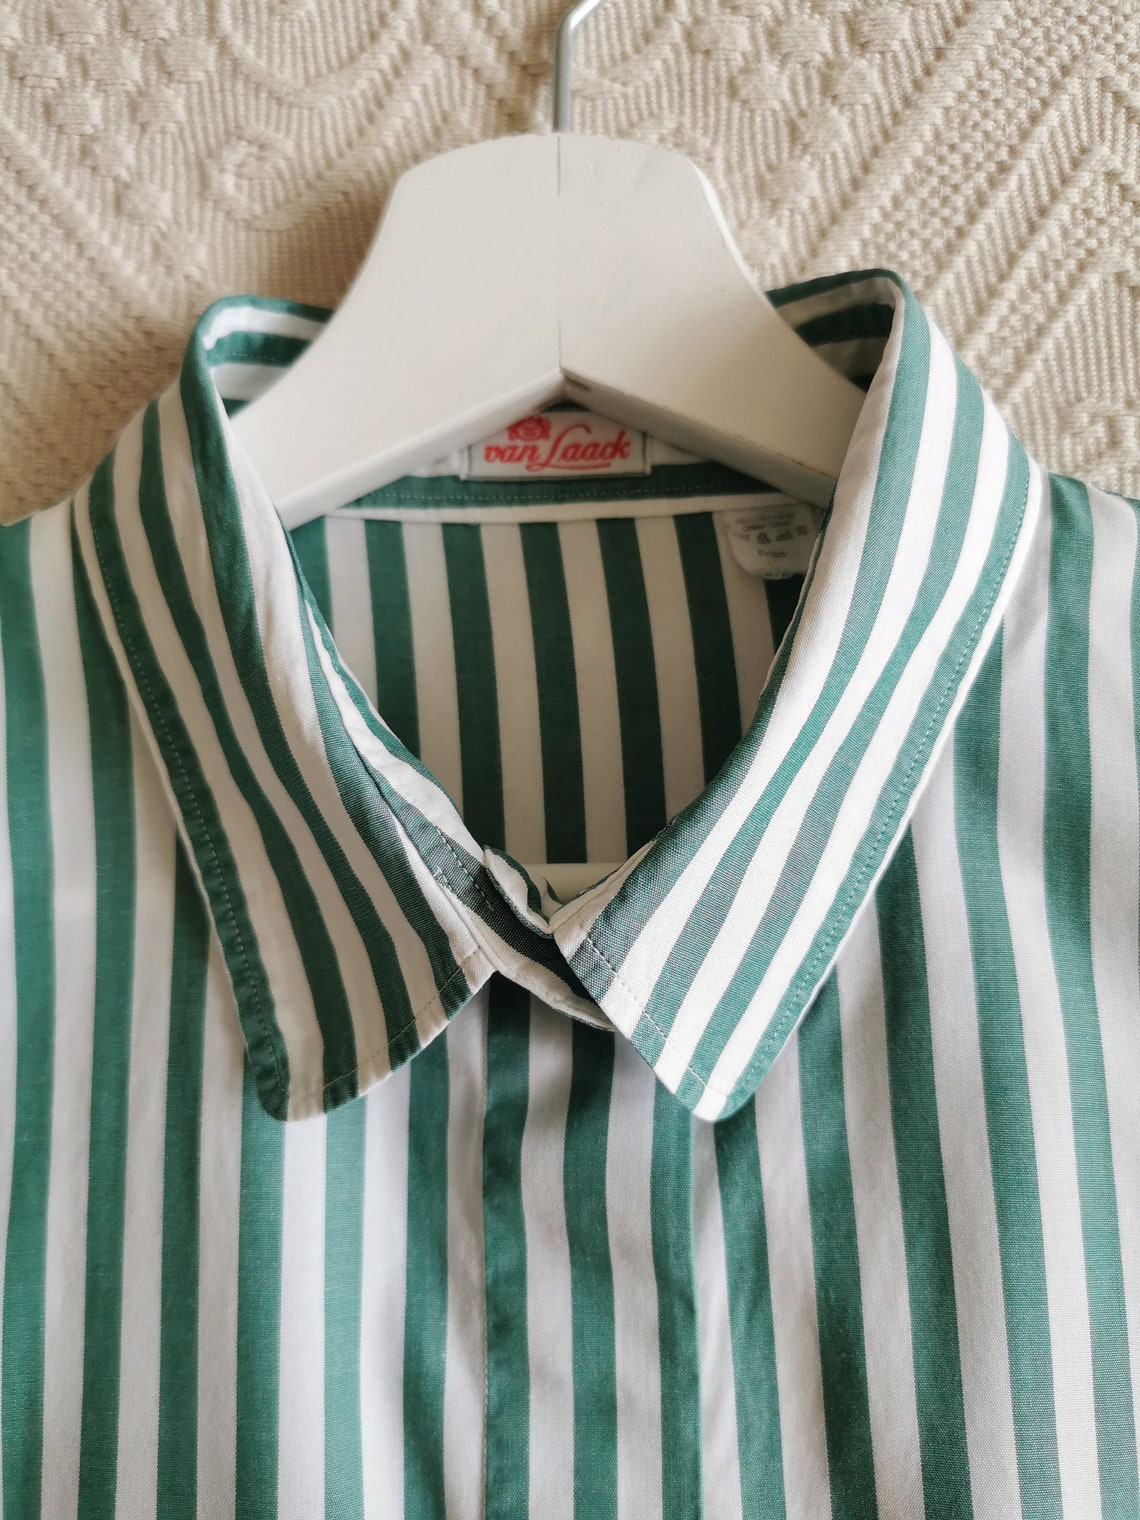 Vintage Van Laack Striped Shirt Long Sleeve Cotton Blouse | Etsy